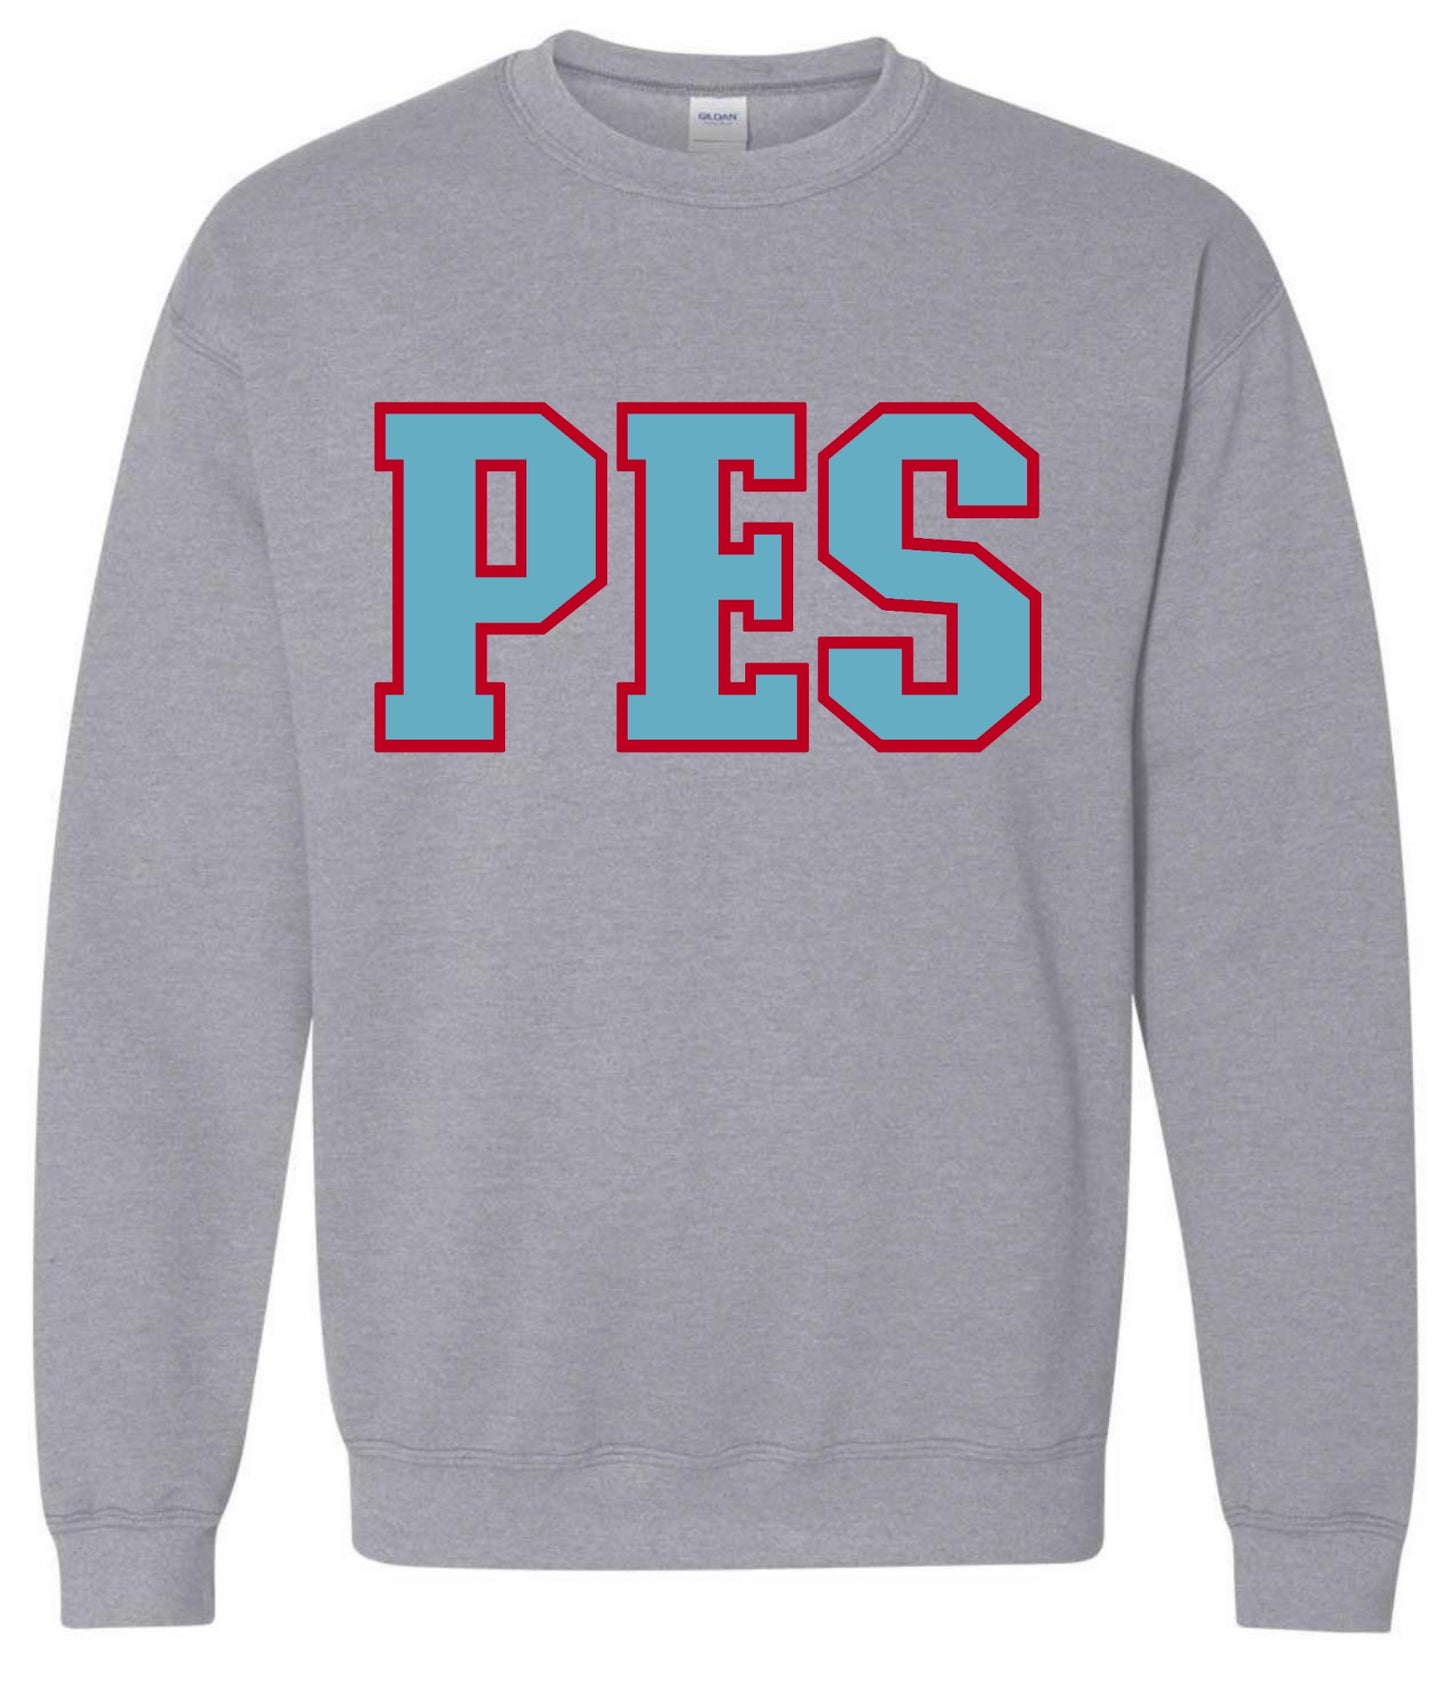 PES Block Sweatshirt